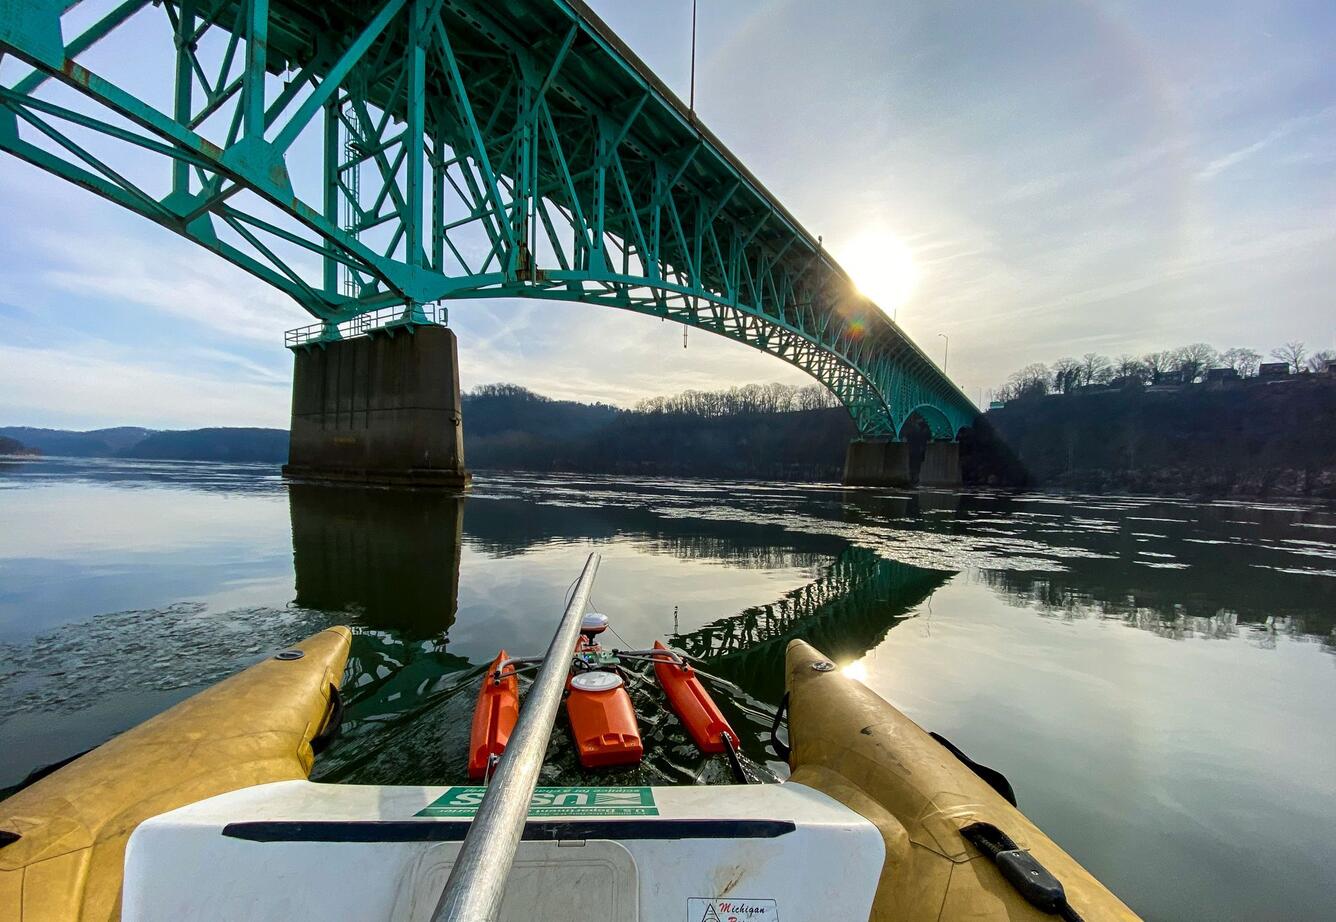 Photograph of boat and bridge, Allegheny River, Pennsylvania